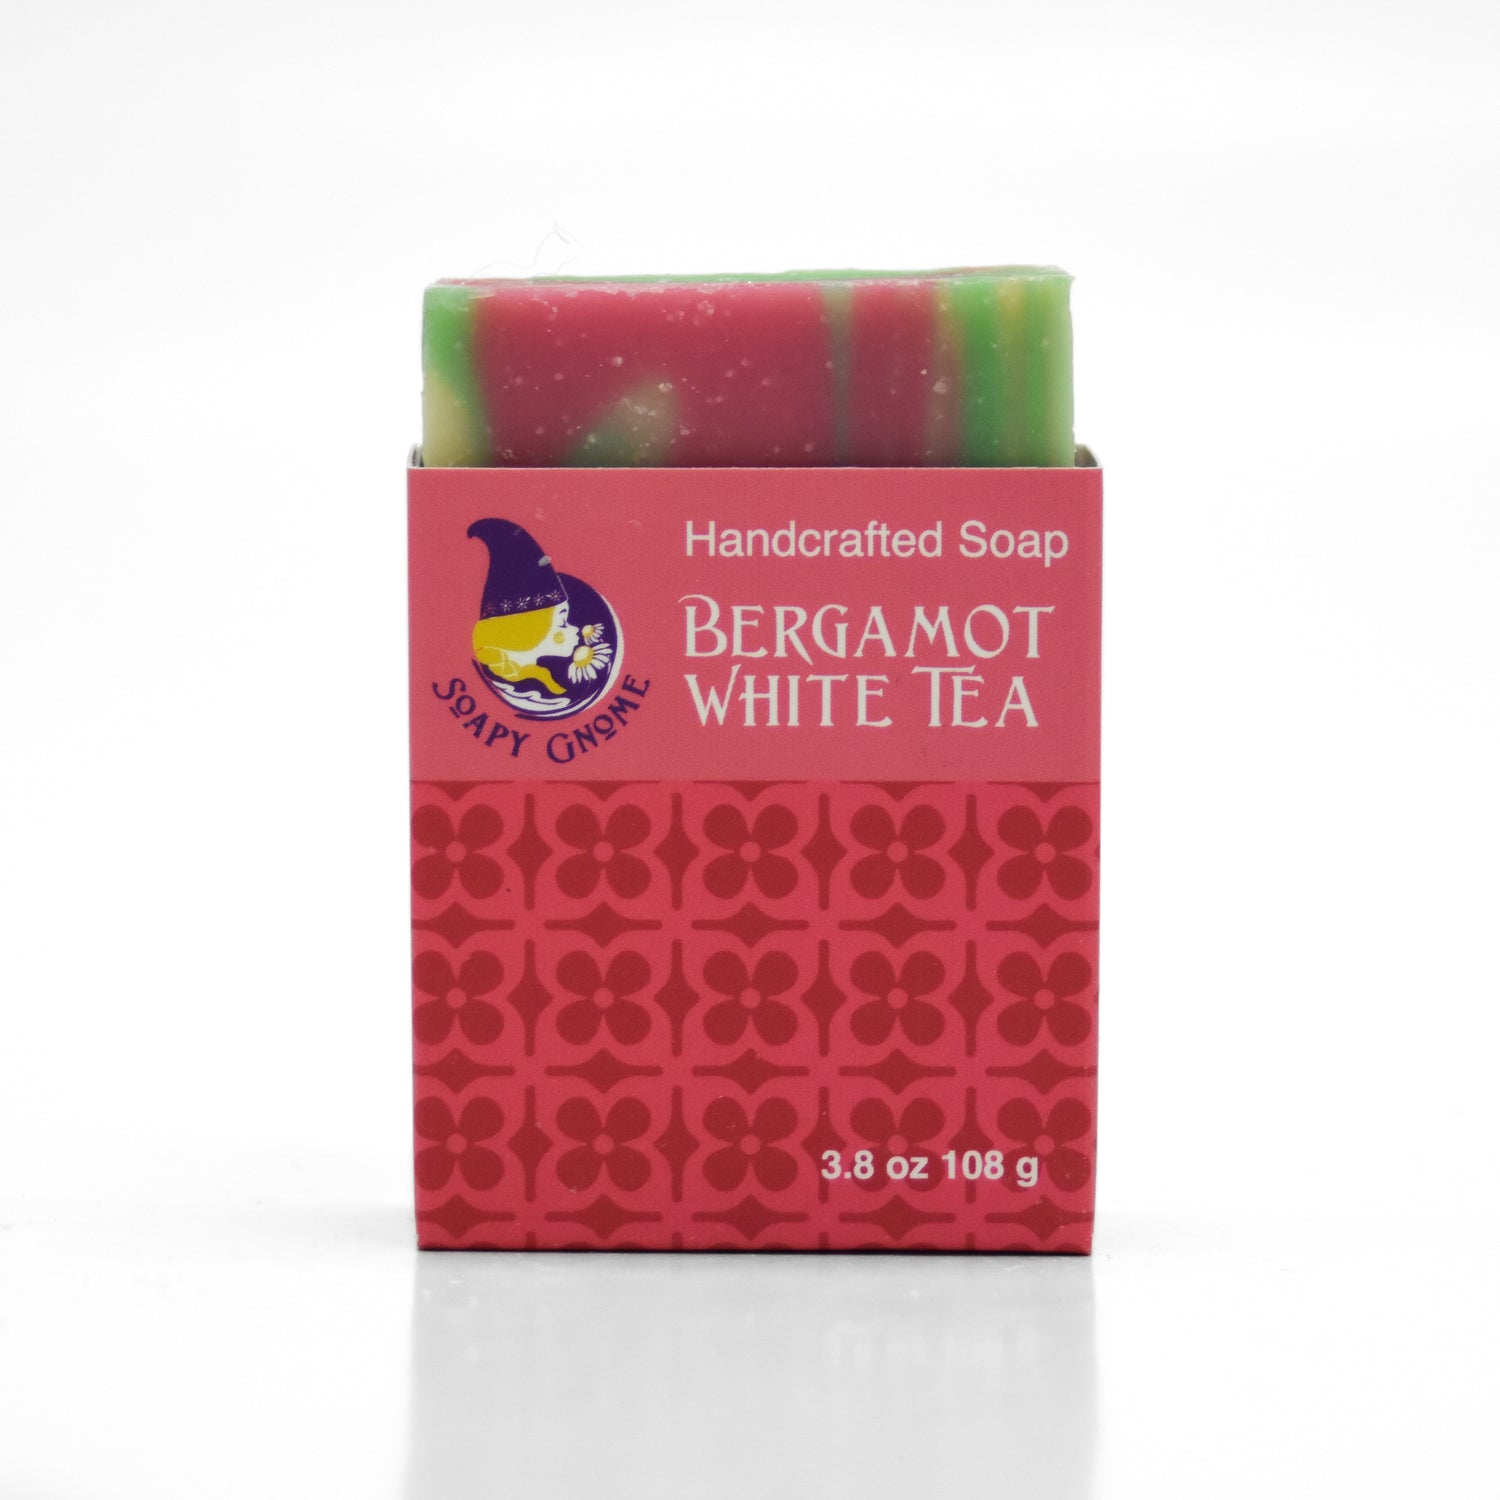 Bergamot White Tea Body Soap Set of 6